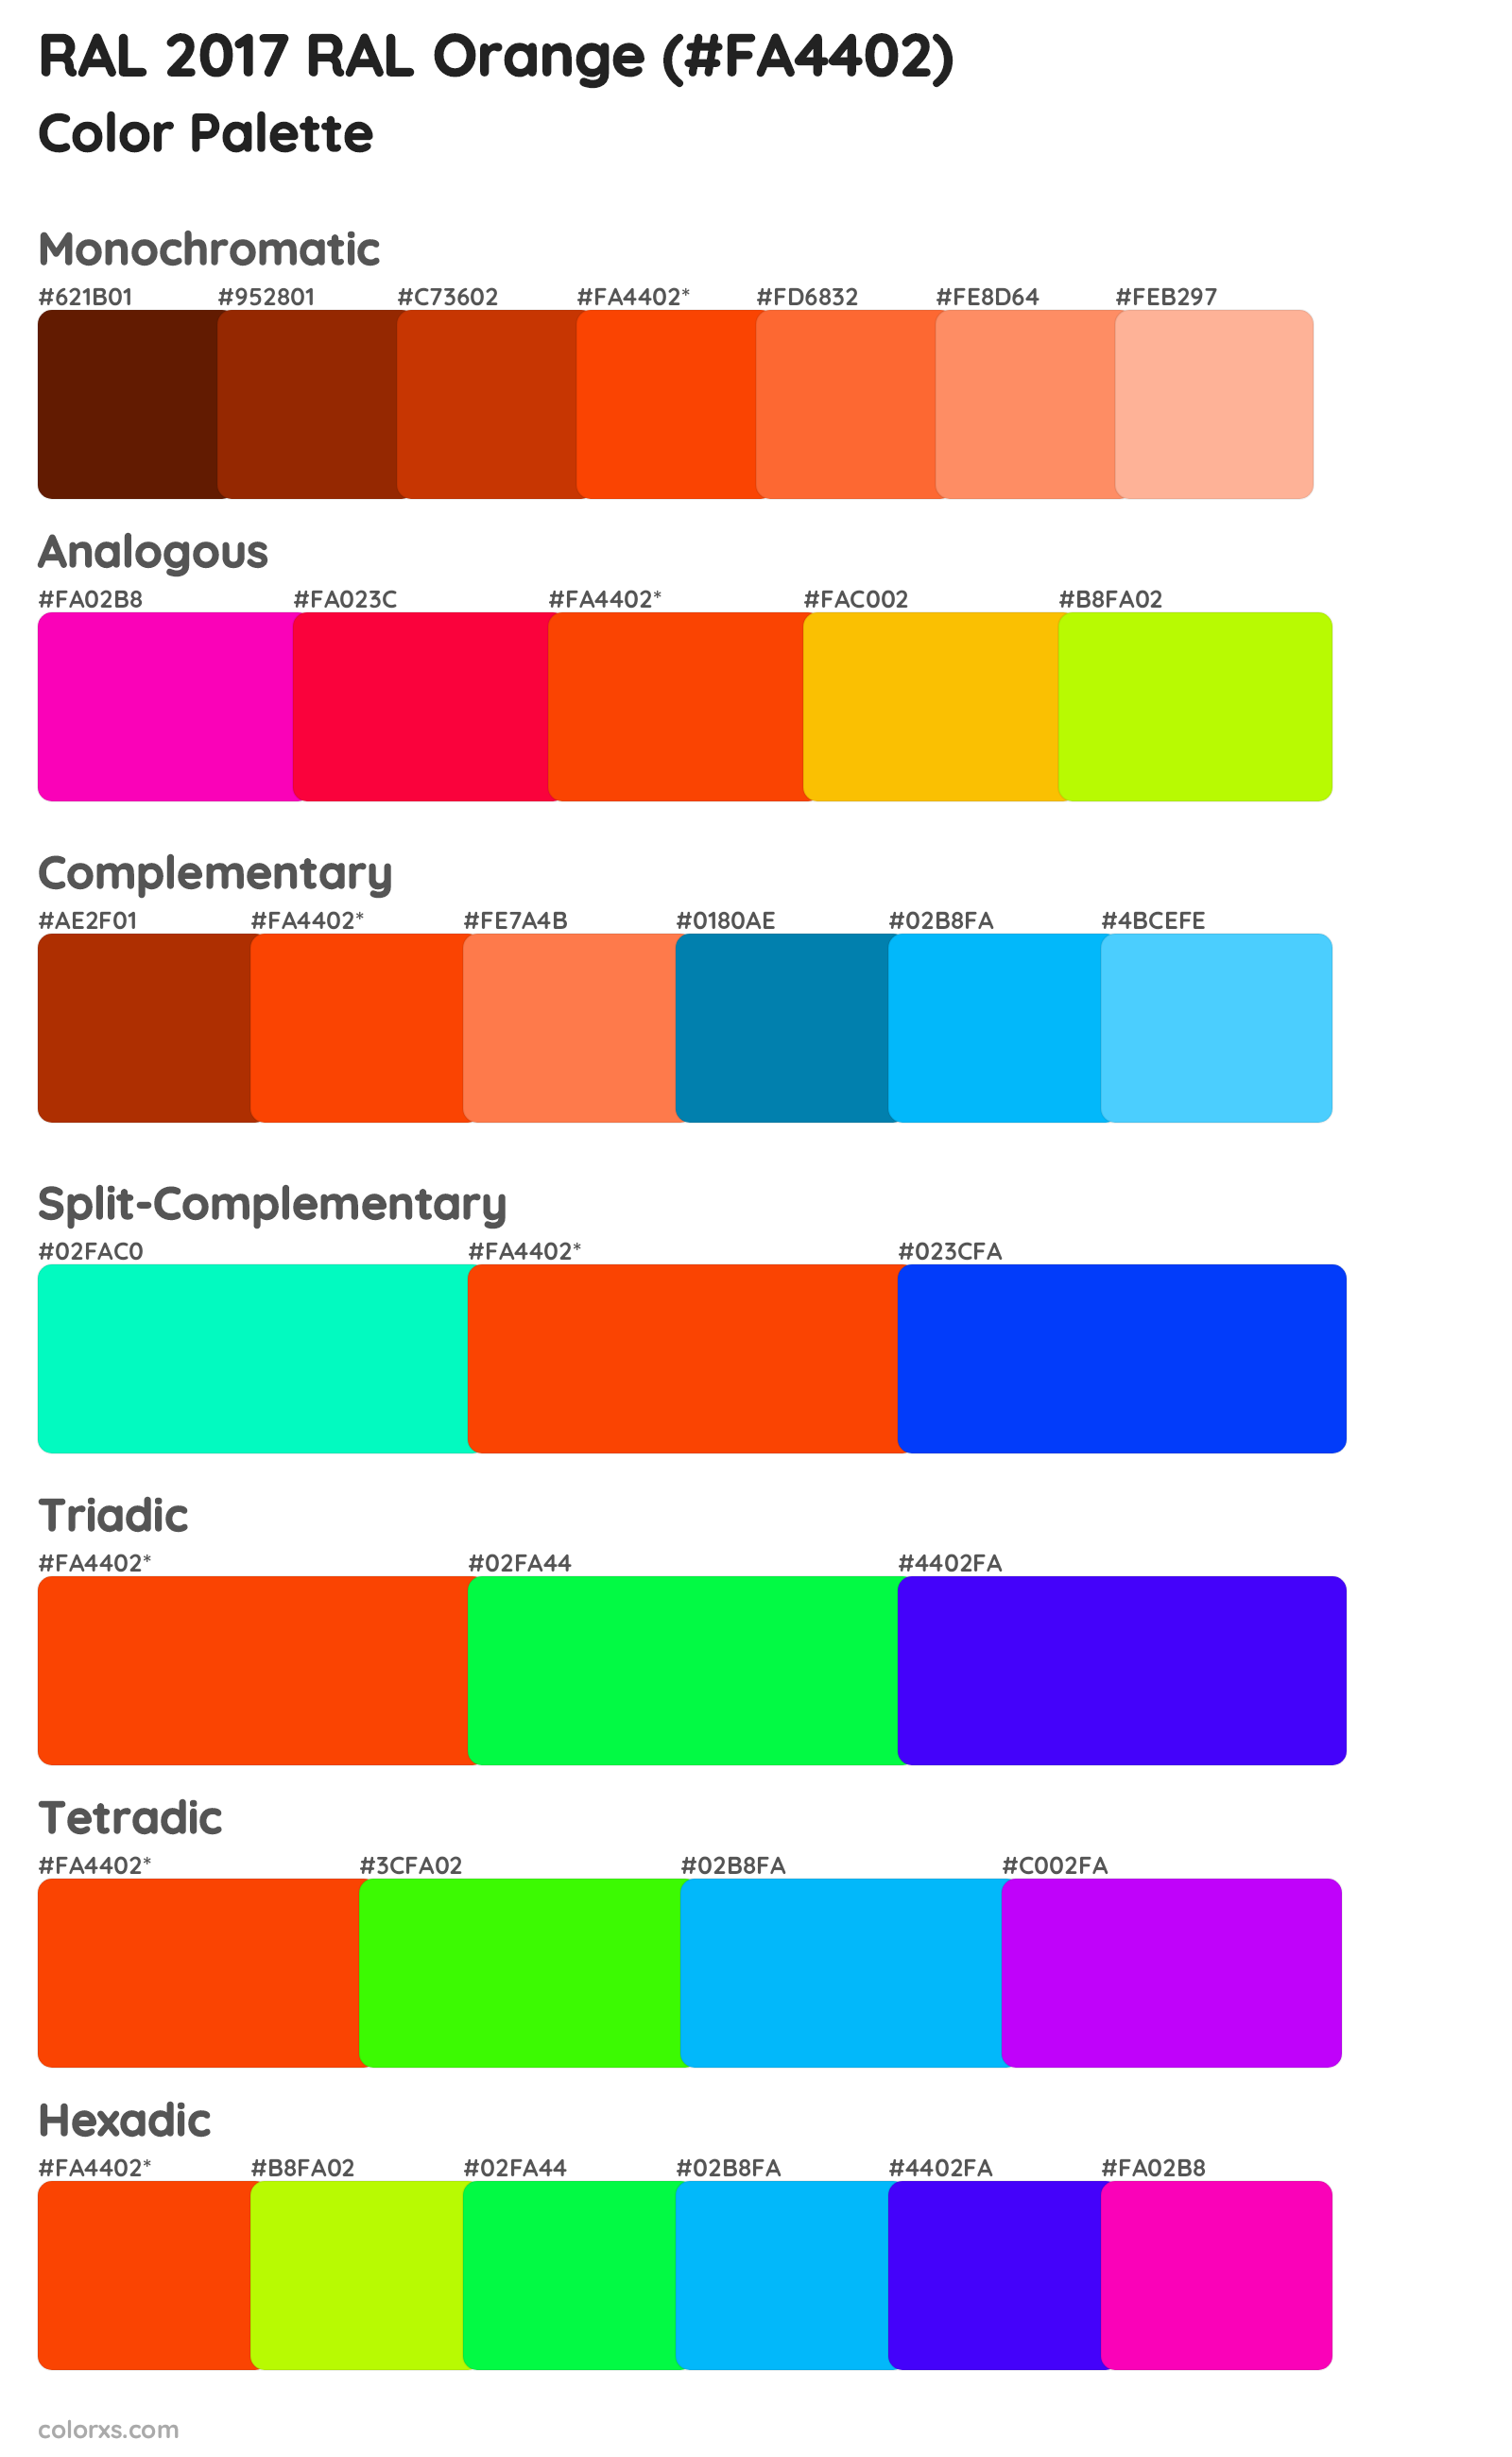 RAL 2017 RAL Orange Color Scheme Palettes